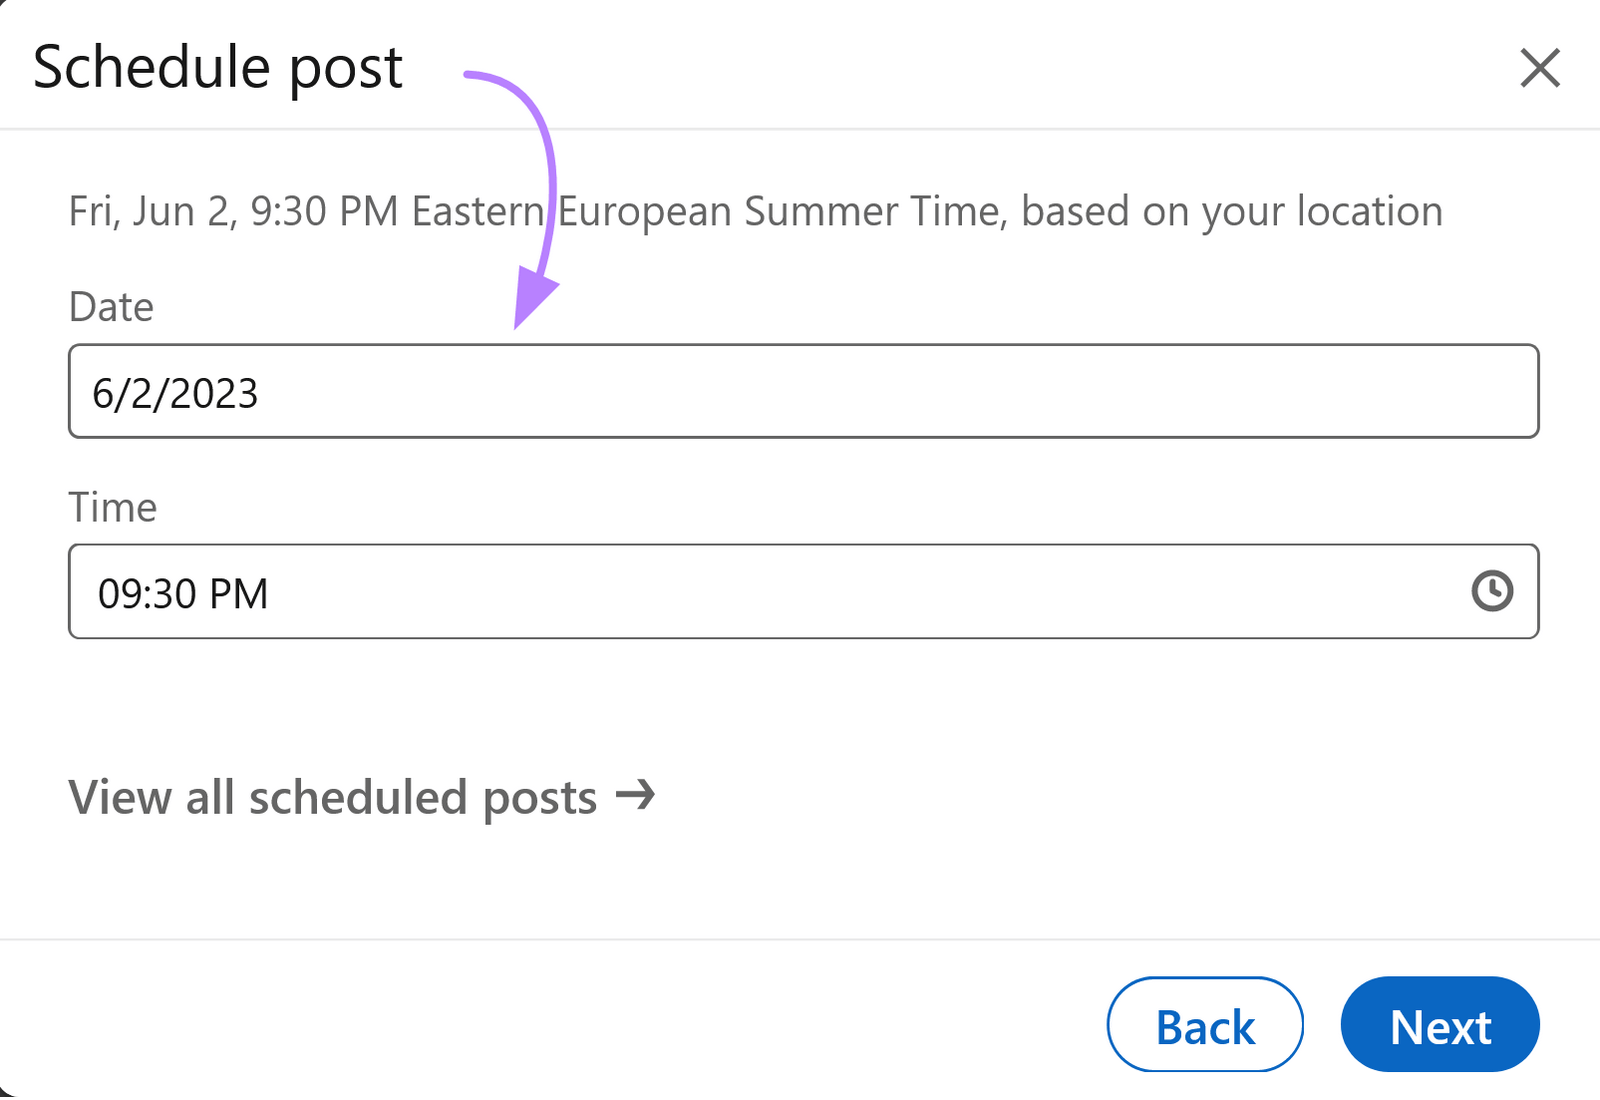 "Schedule post" box